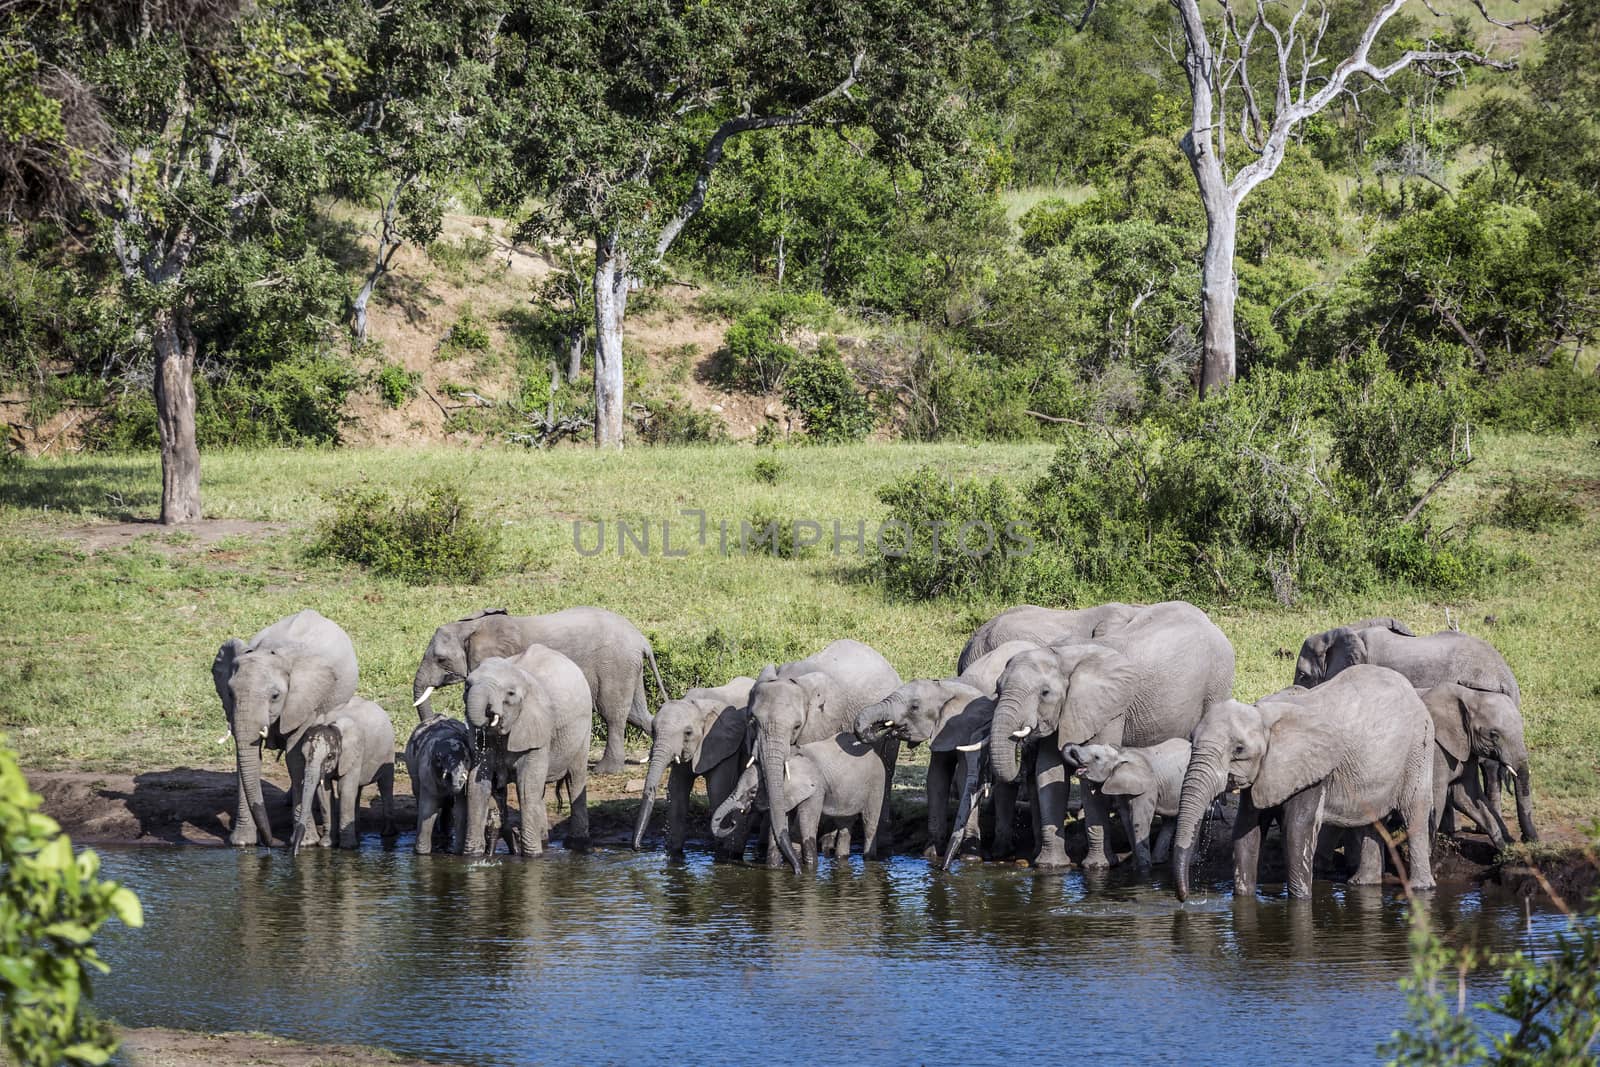 African bush elephant herd drinking in waterhole in Kruger National park, South Africa ; Specie Loxodonta africana family of Elephantidae